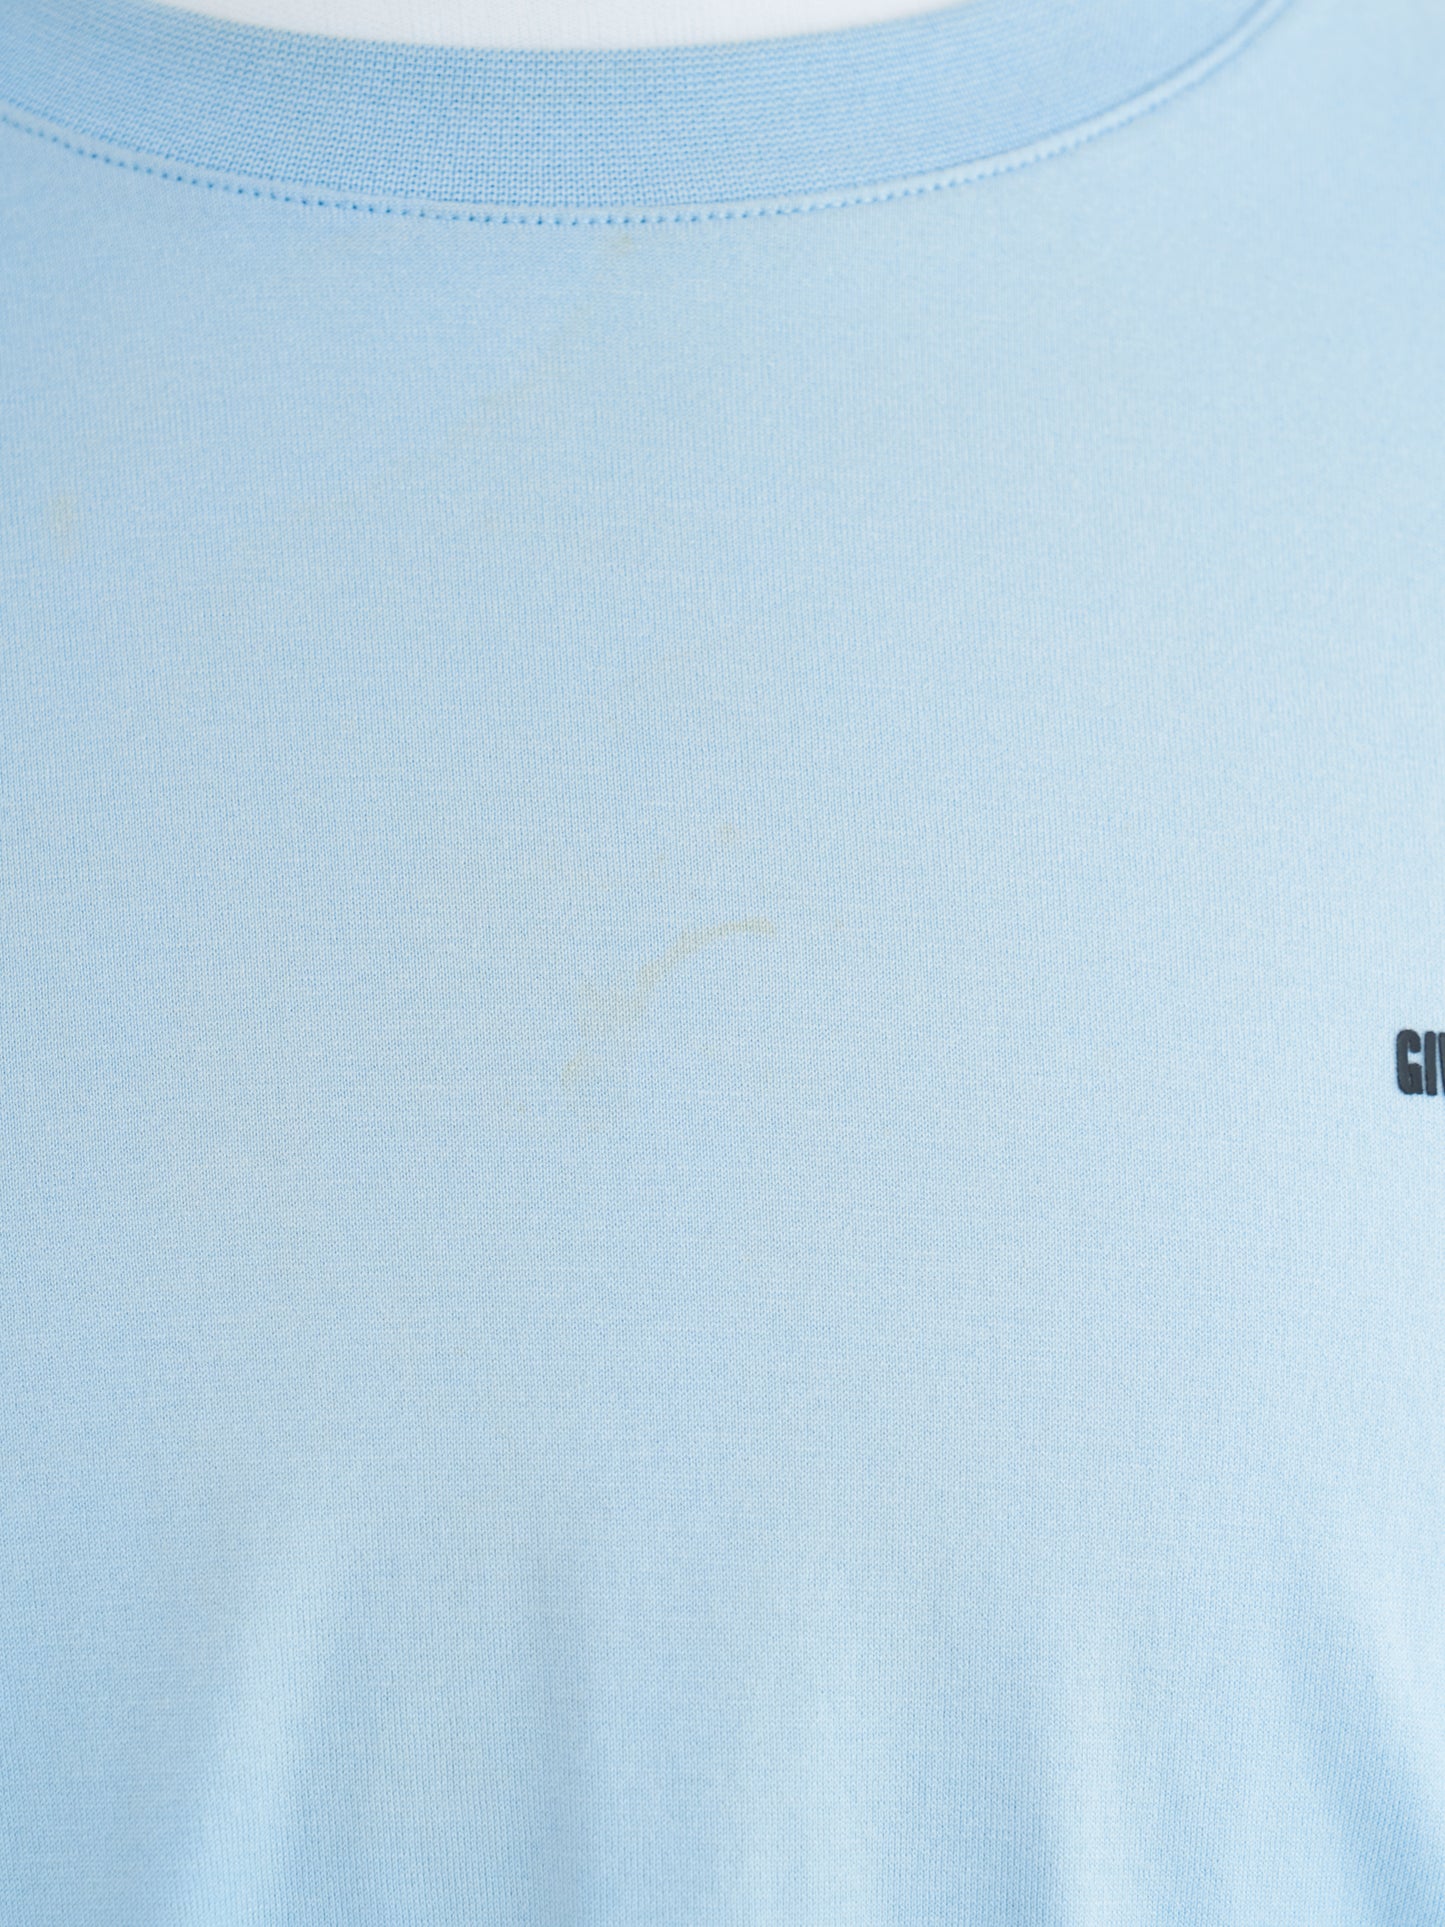 [GIVENCHY] バックプリントTシャツ UPA02095